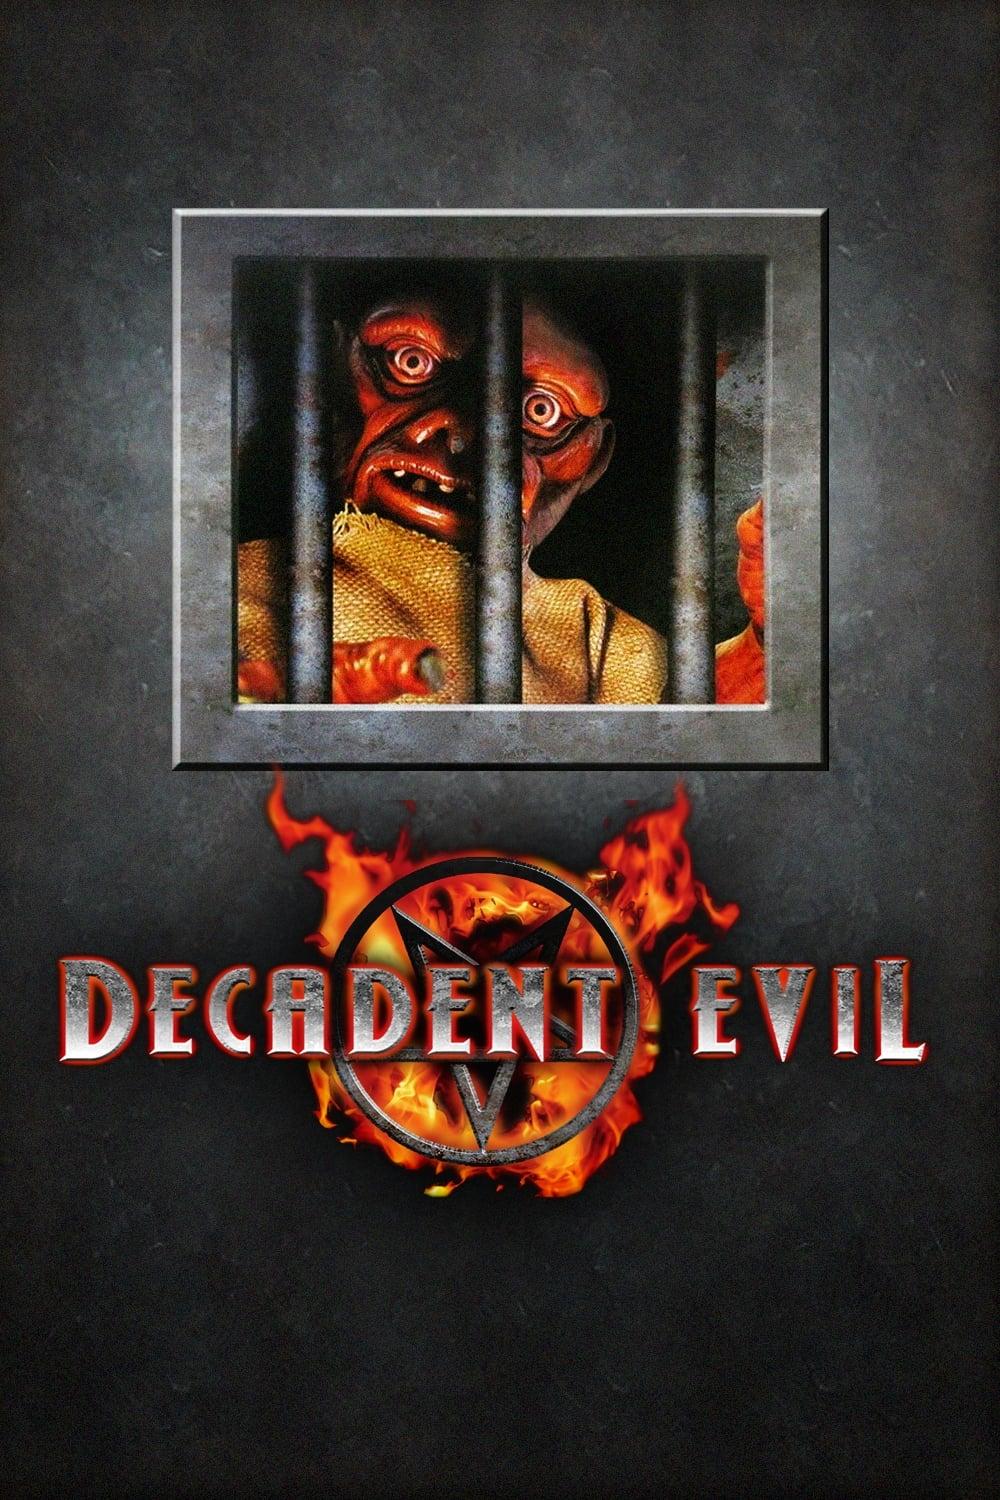 Decadent Evil poster